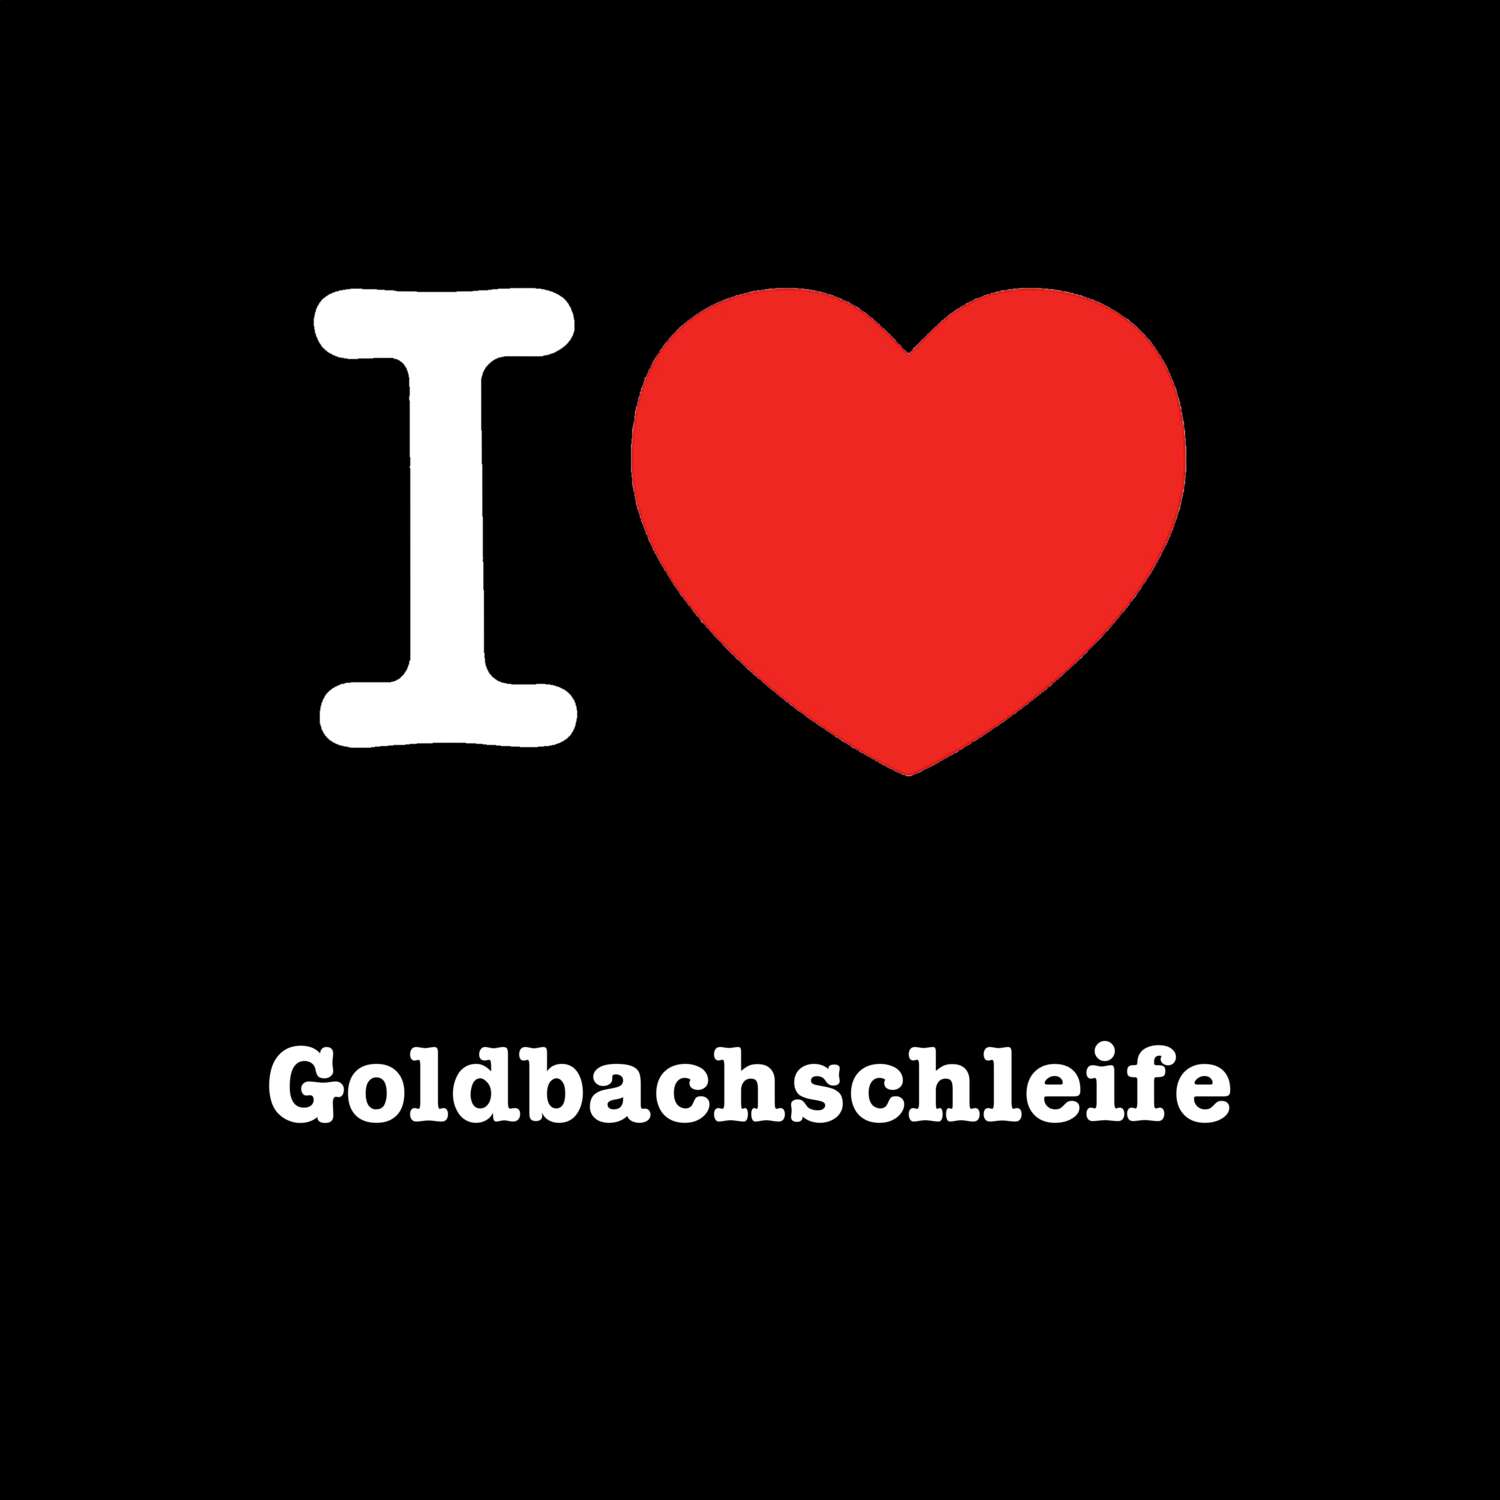 Goldbachschleife T-Shirt »I love«